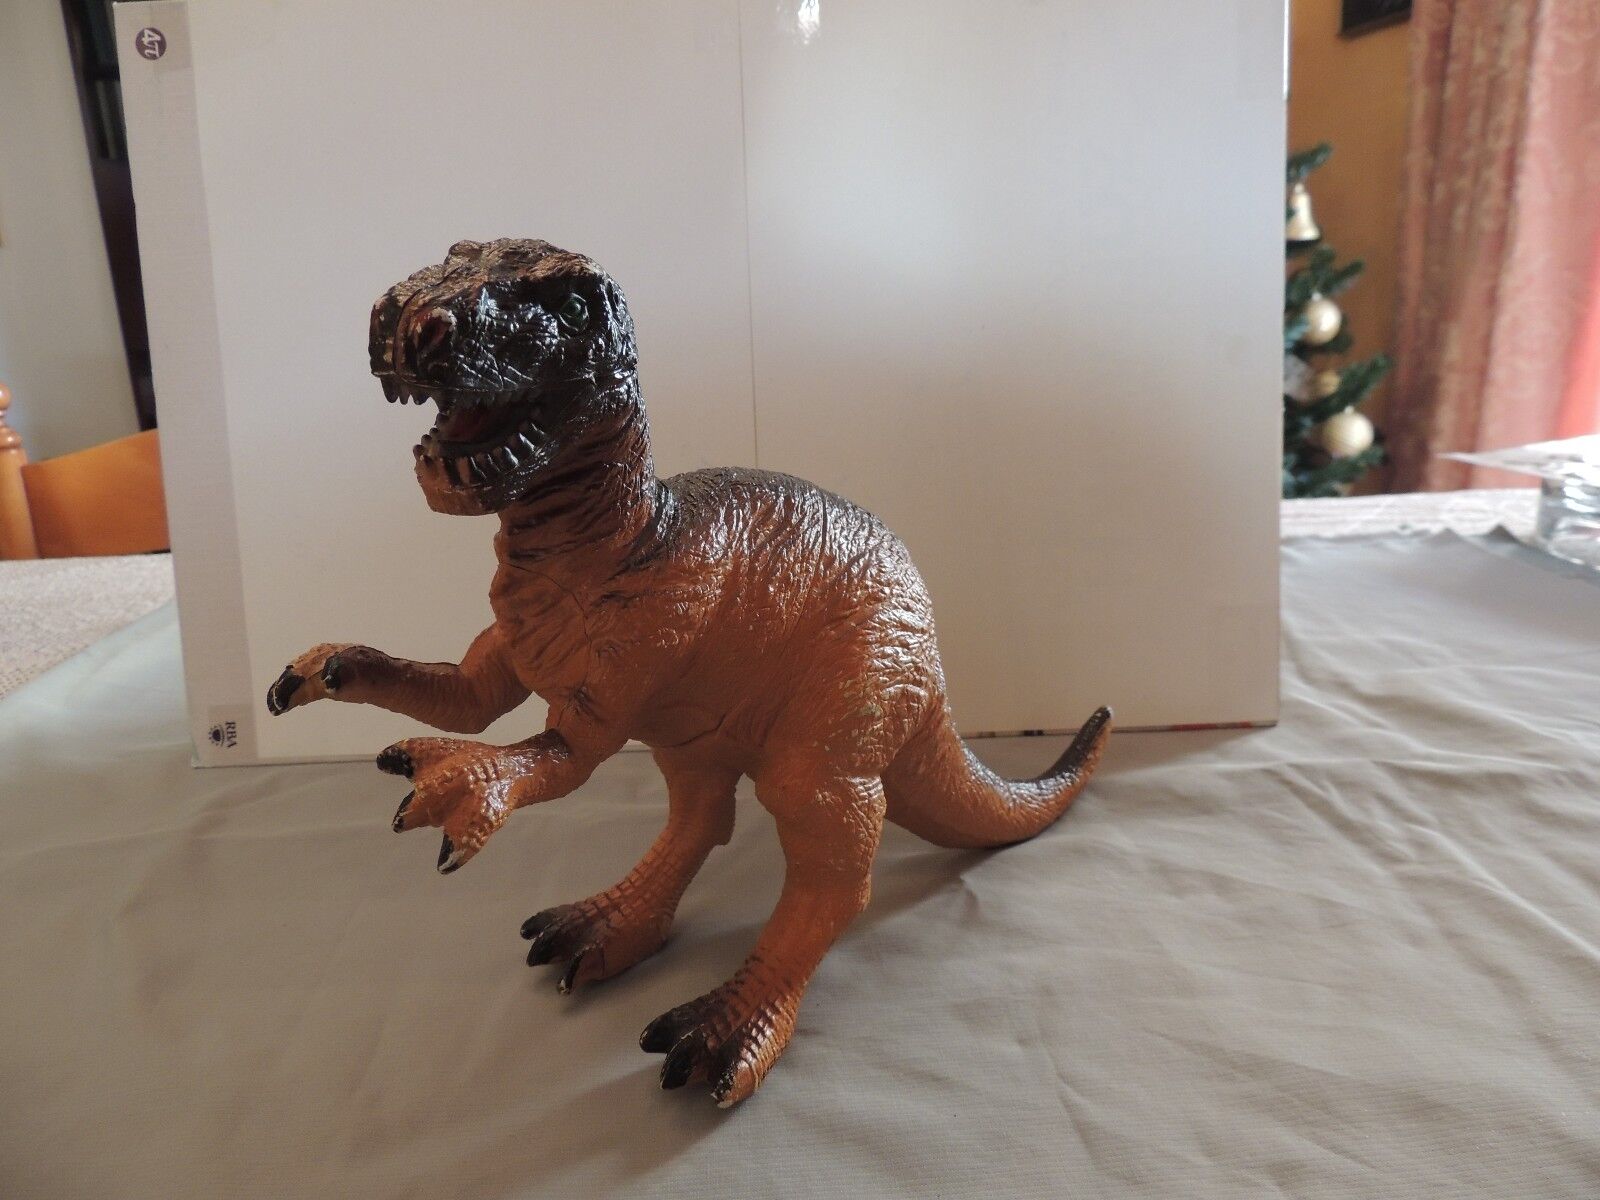 Jurassic Dinosaur Collectible Figure. Species unidentified. Check details